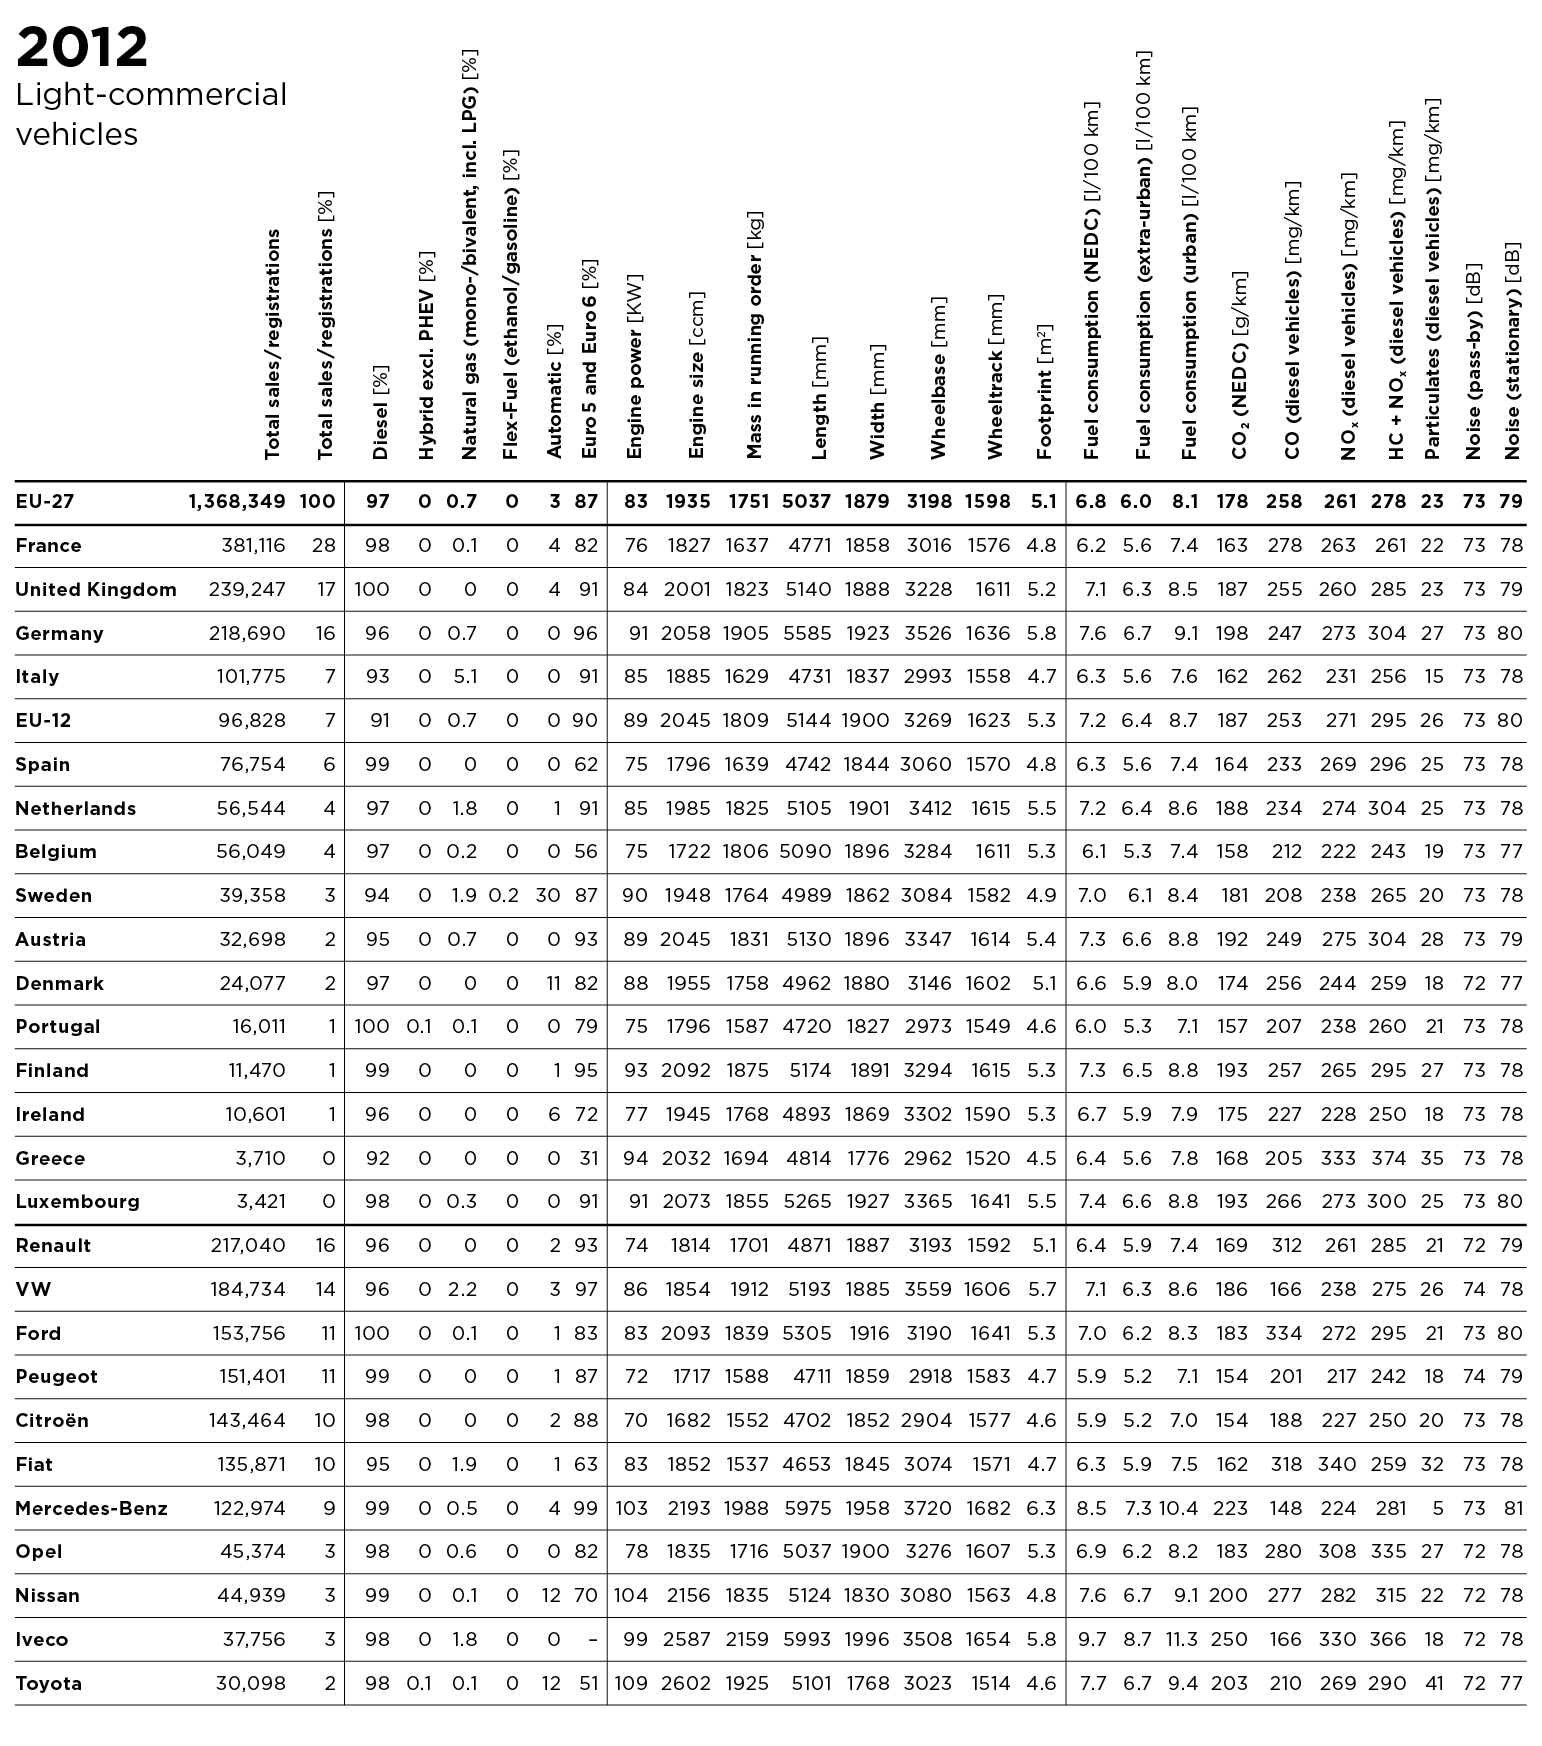 LCV 2012 data